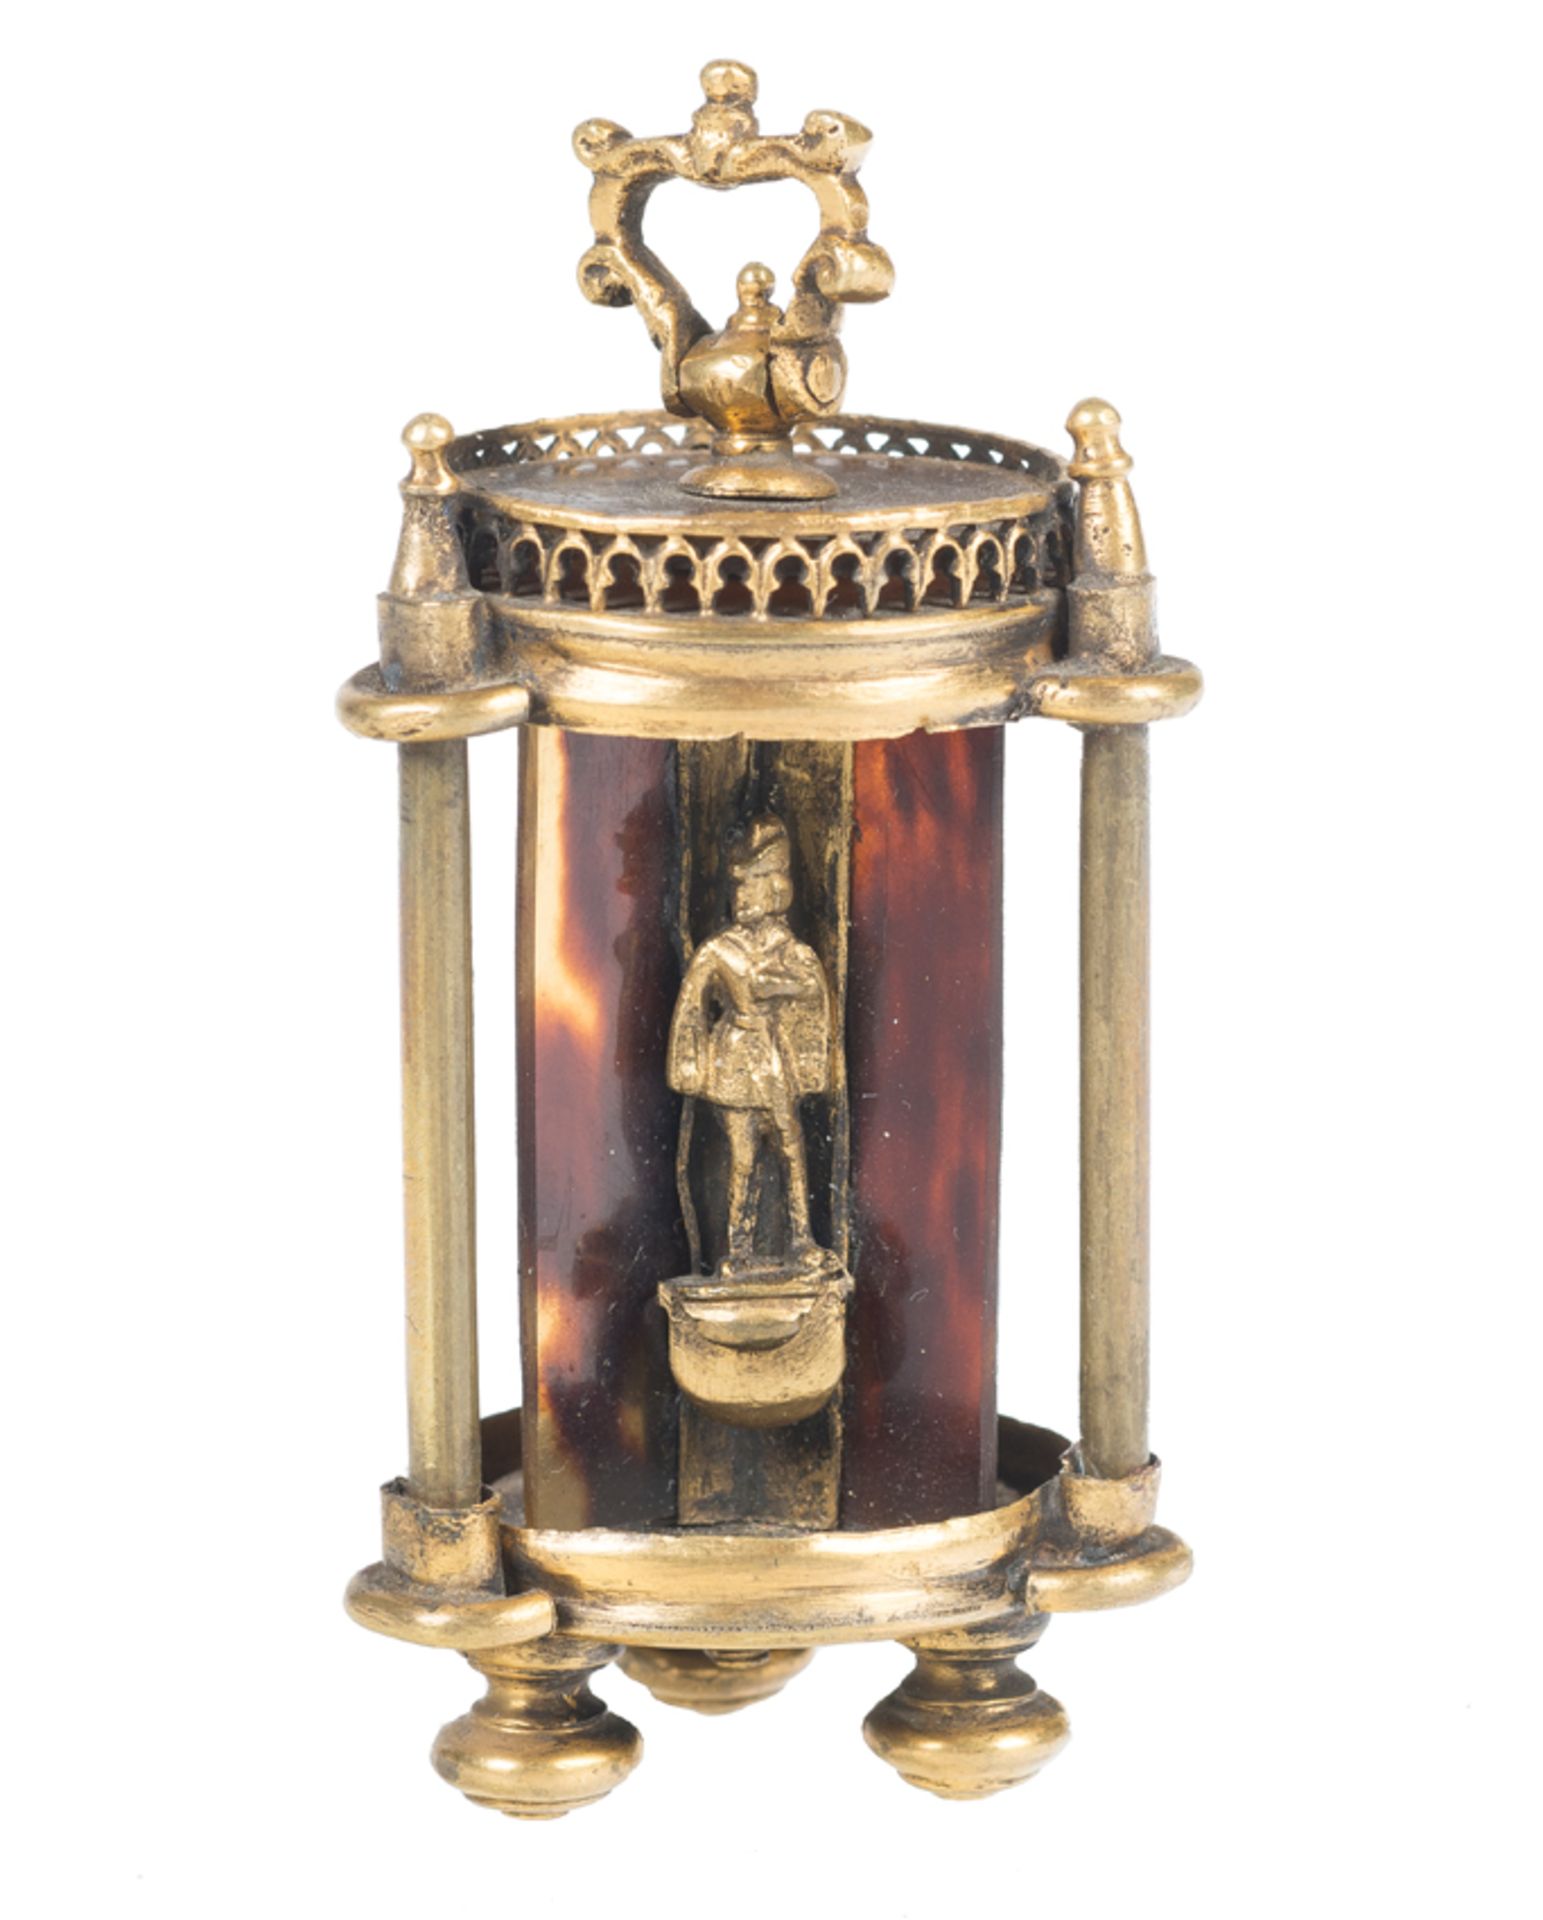 Small gilded bronze and tortoiseshell shrine pendant. Spain or Italy. 16th century.